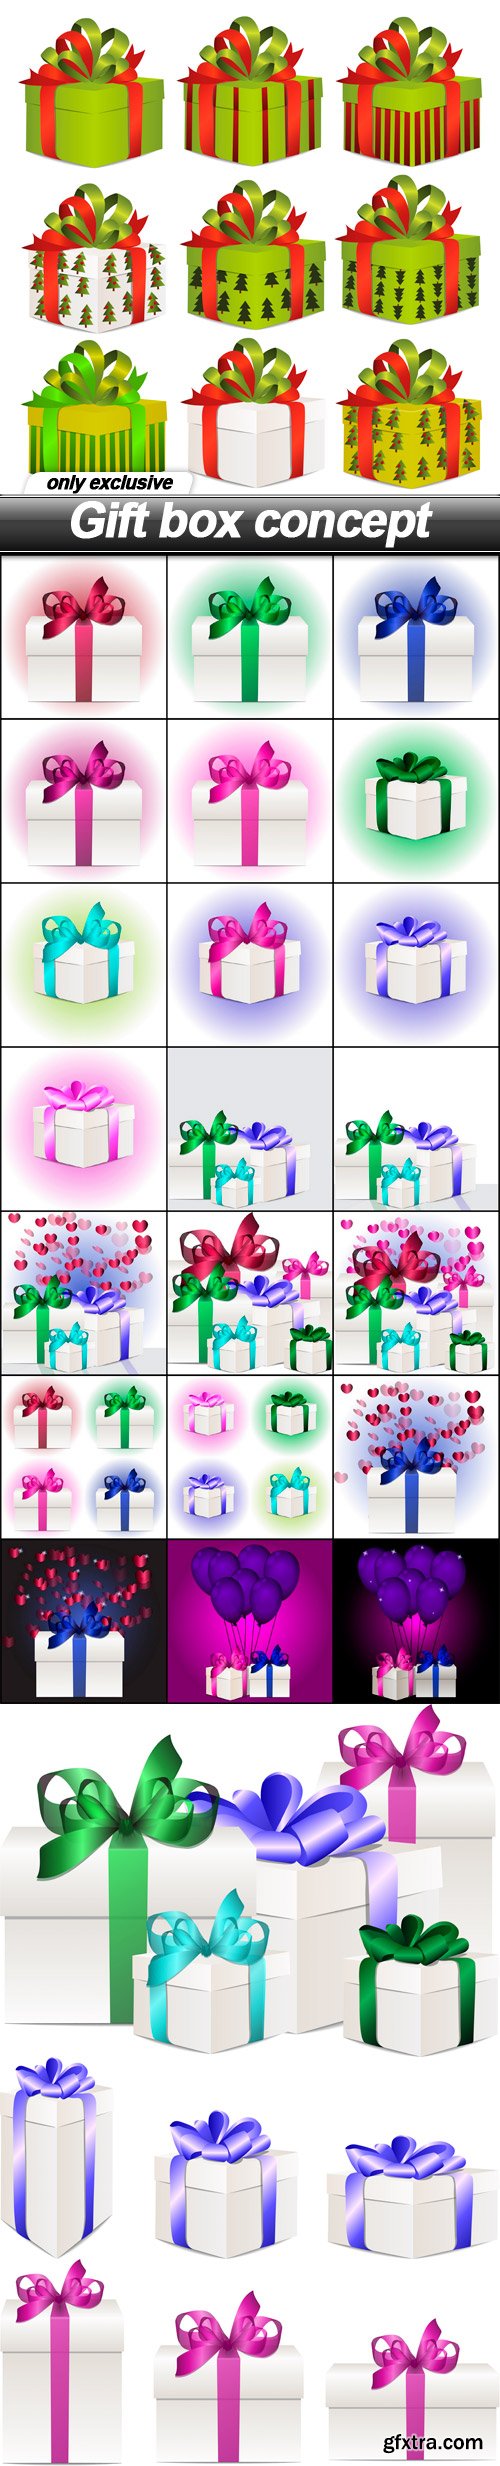 Gift box concept - 25 EPS